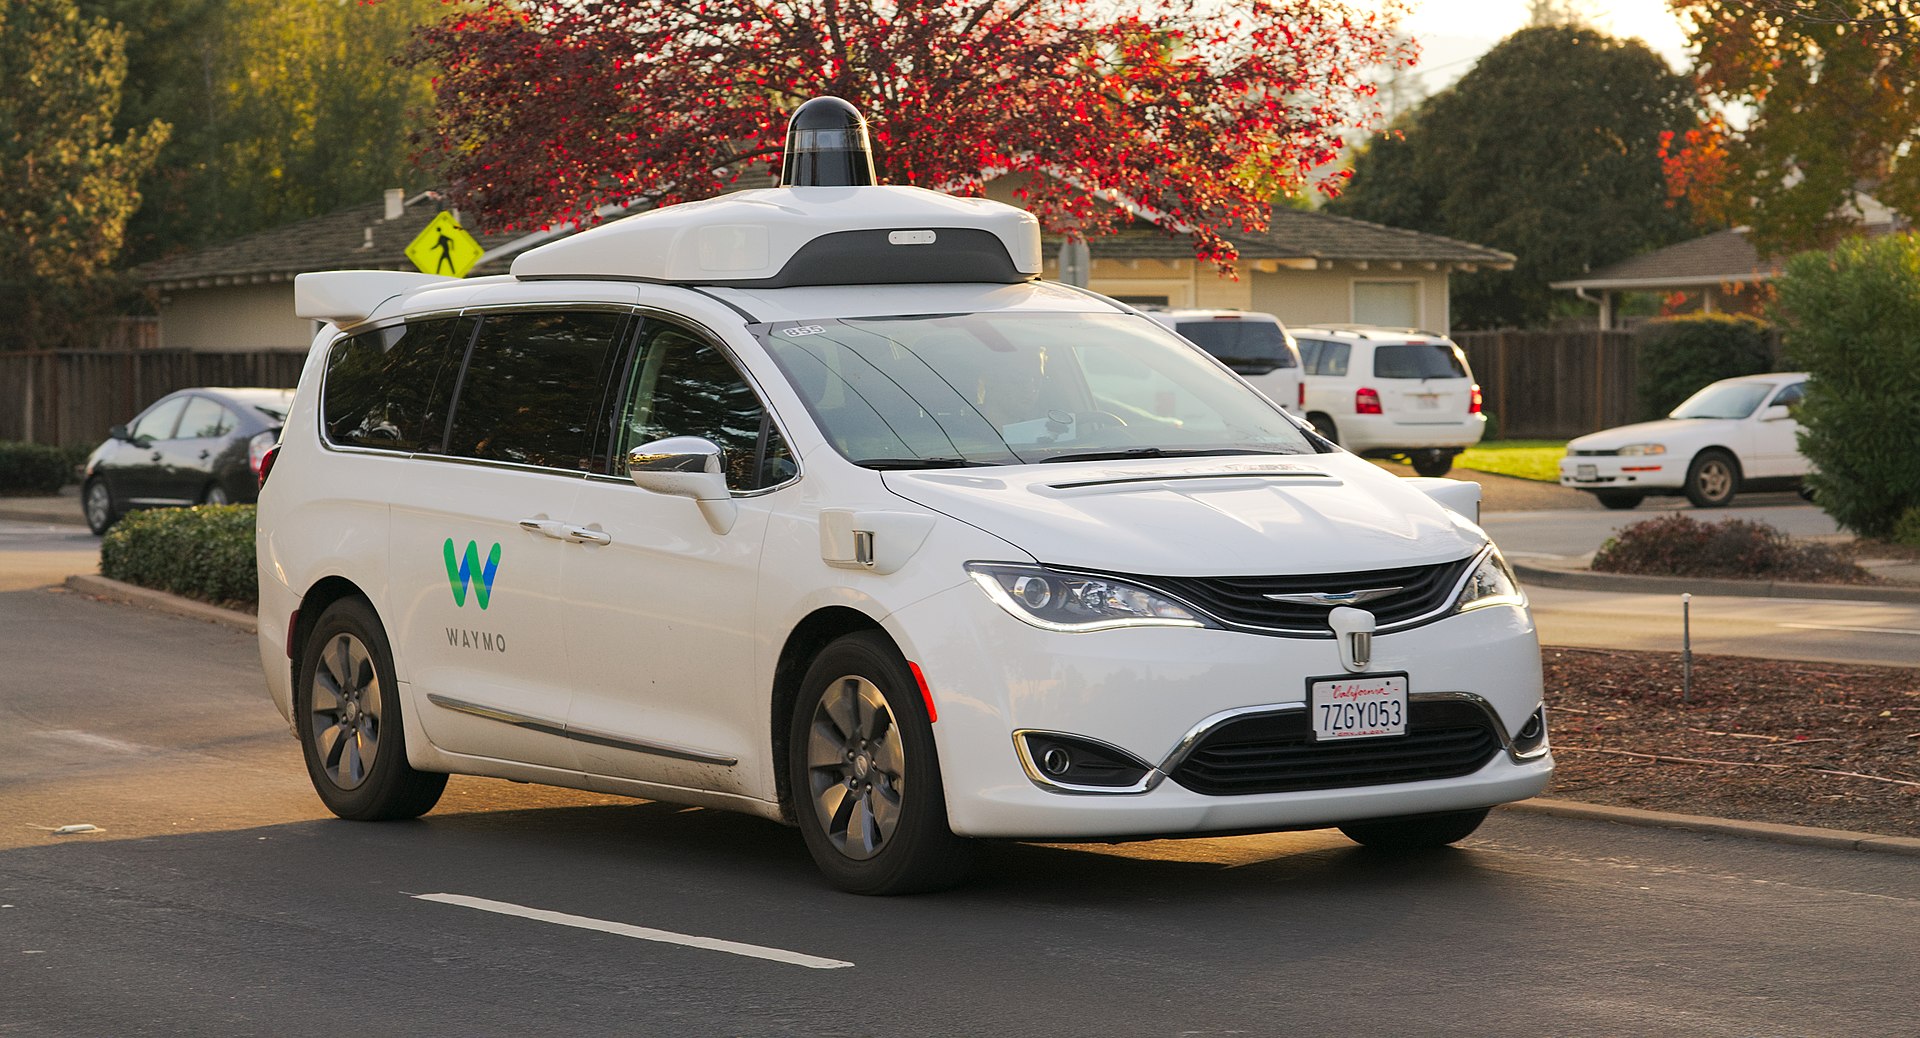 Google owned Waymo's driverless car vandalised in Arizona